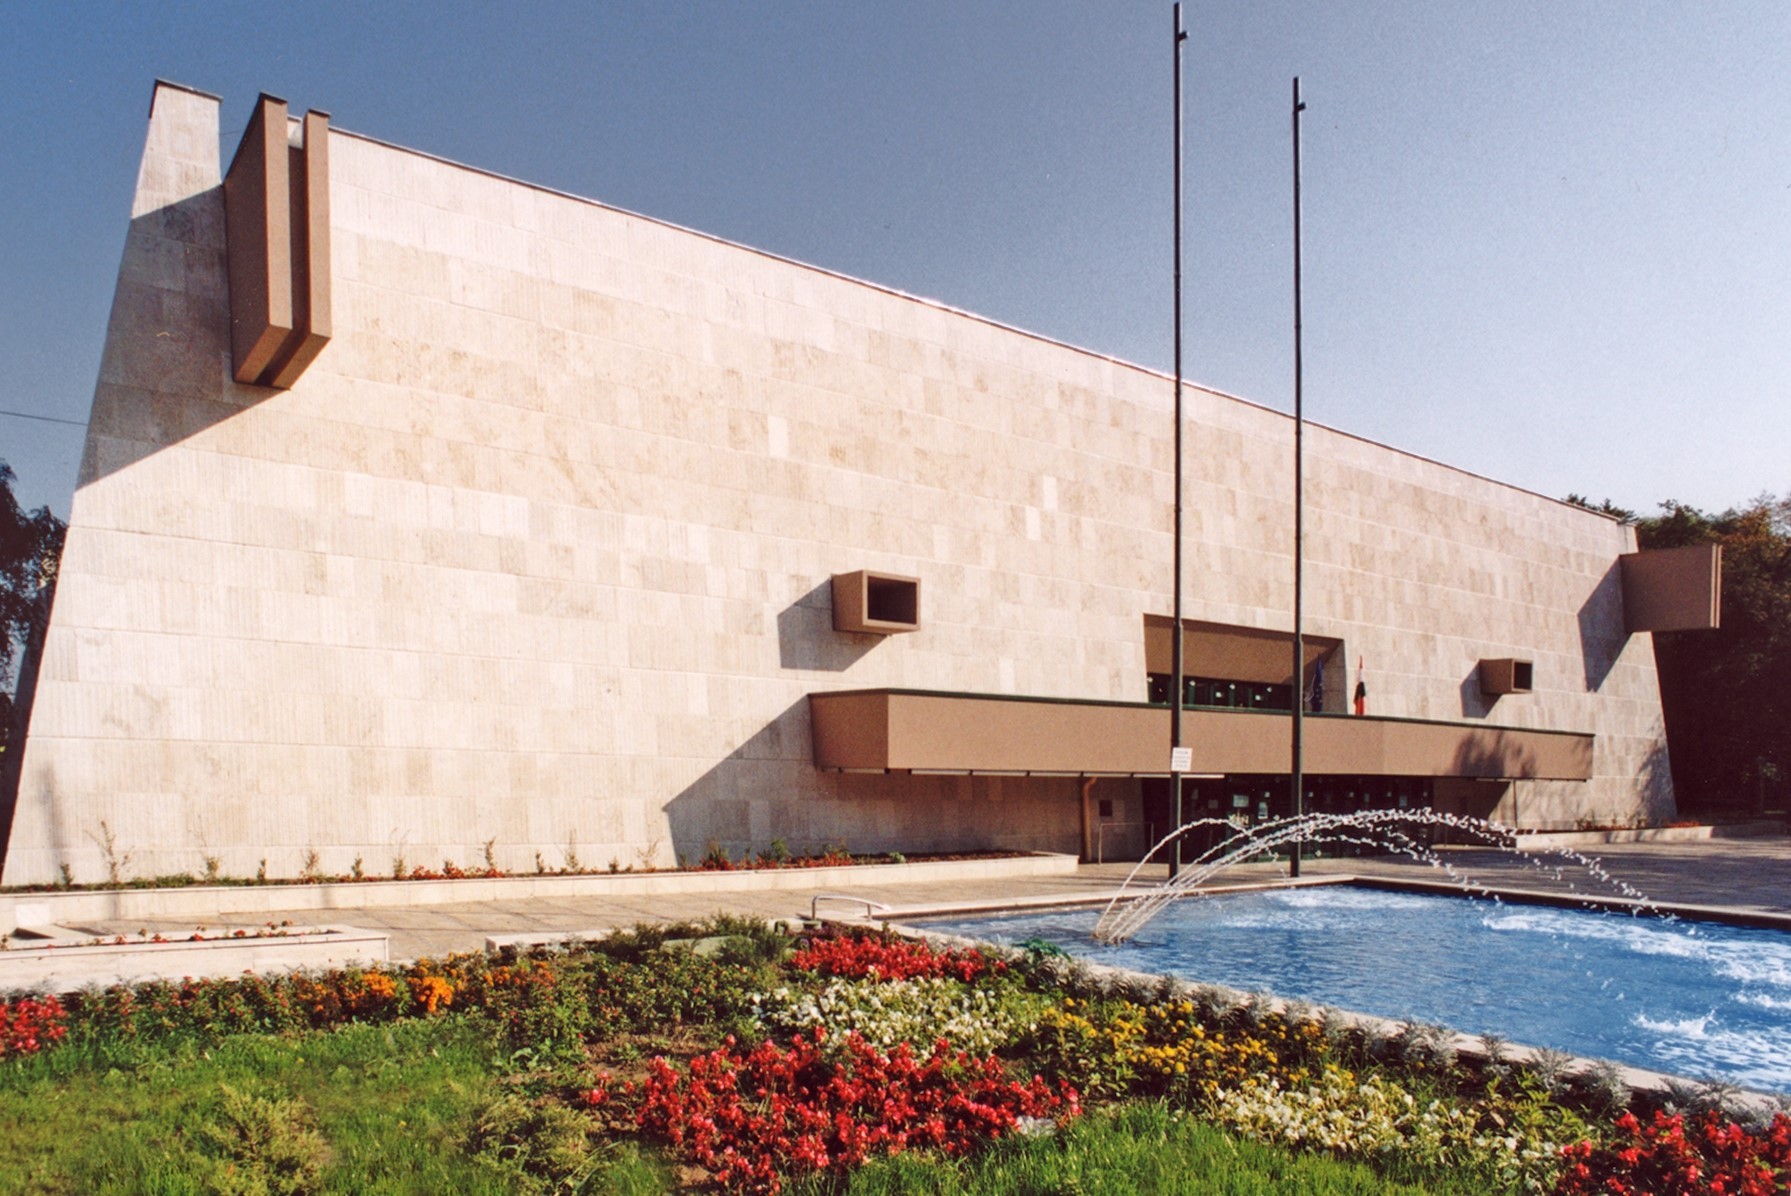 Sports Hall of Miskolc reconstruction, 6200m2, 2004. Developed by FK-Raszter Zrt.